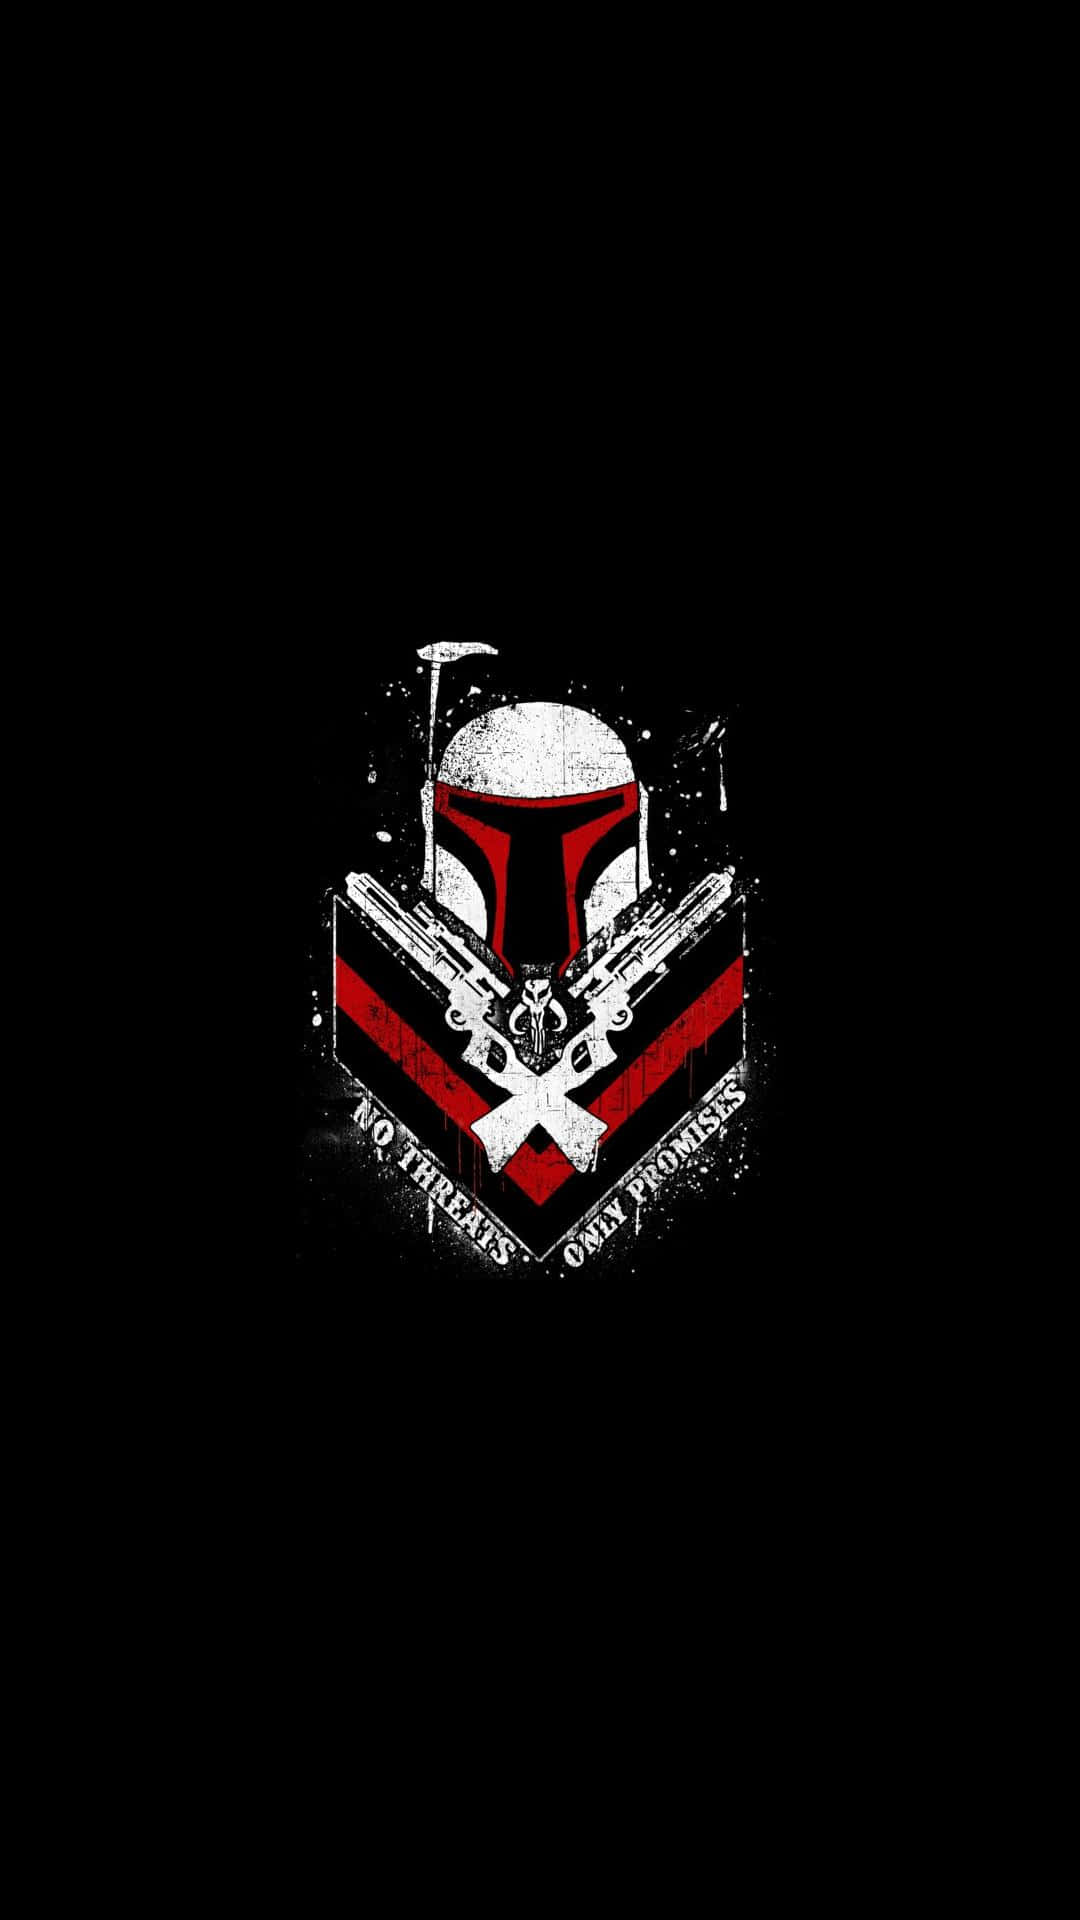 The Star Wars Boba Fett Logo On A Black Background Wallpaper